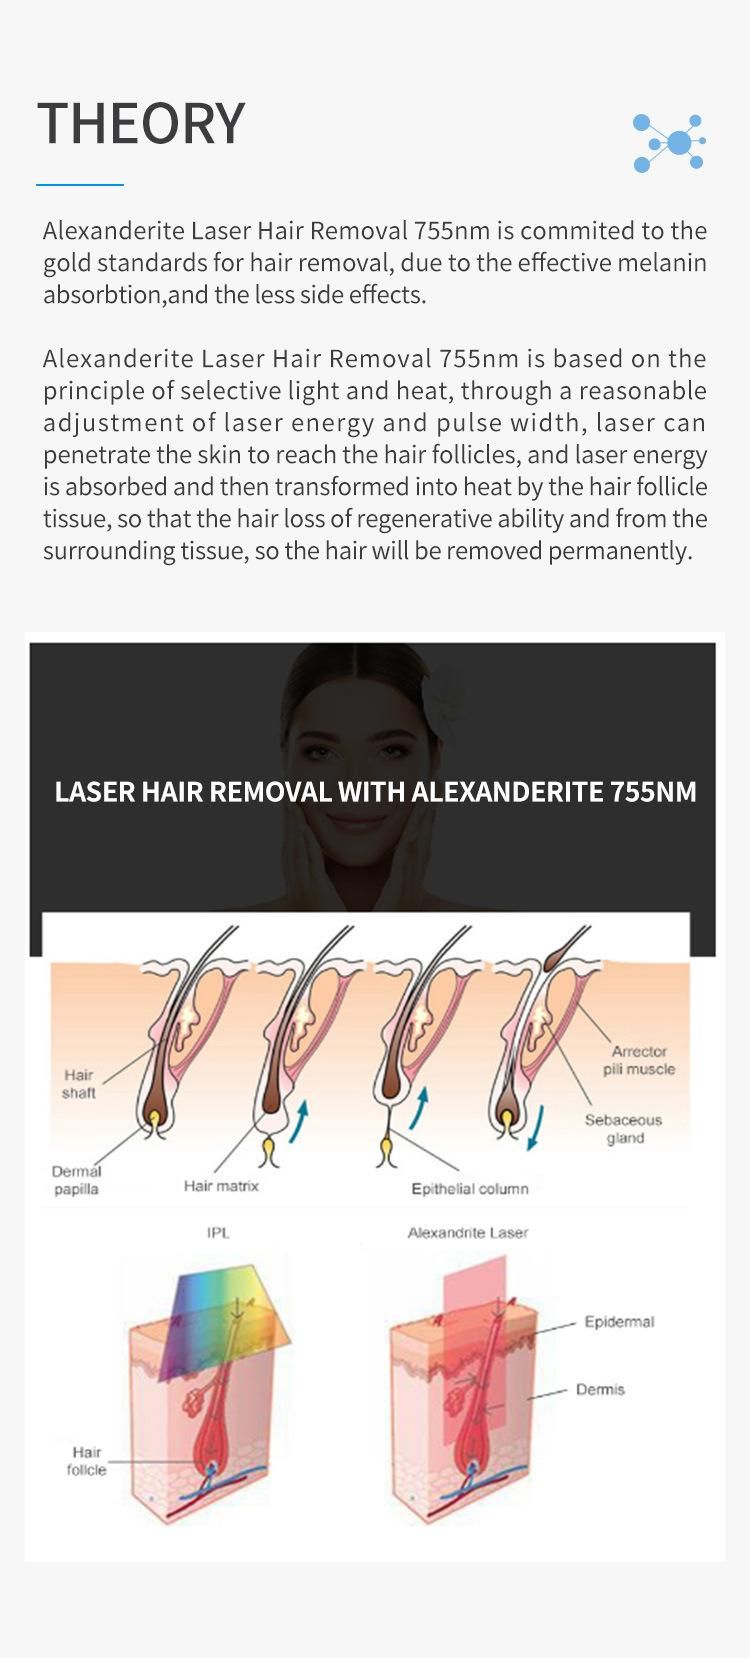 Alexandrite Laser Hair Removallaser Hair Removal Alexandralaser Hair Removal Machinehair Removal Laser